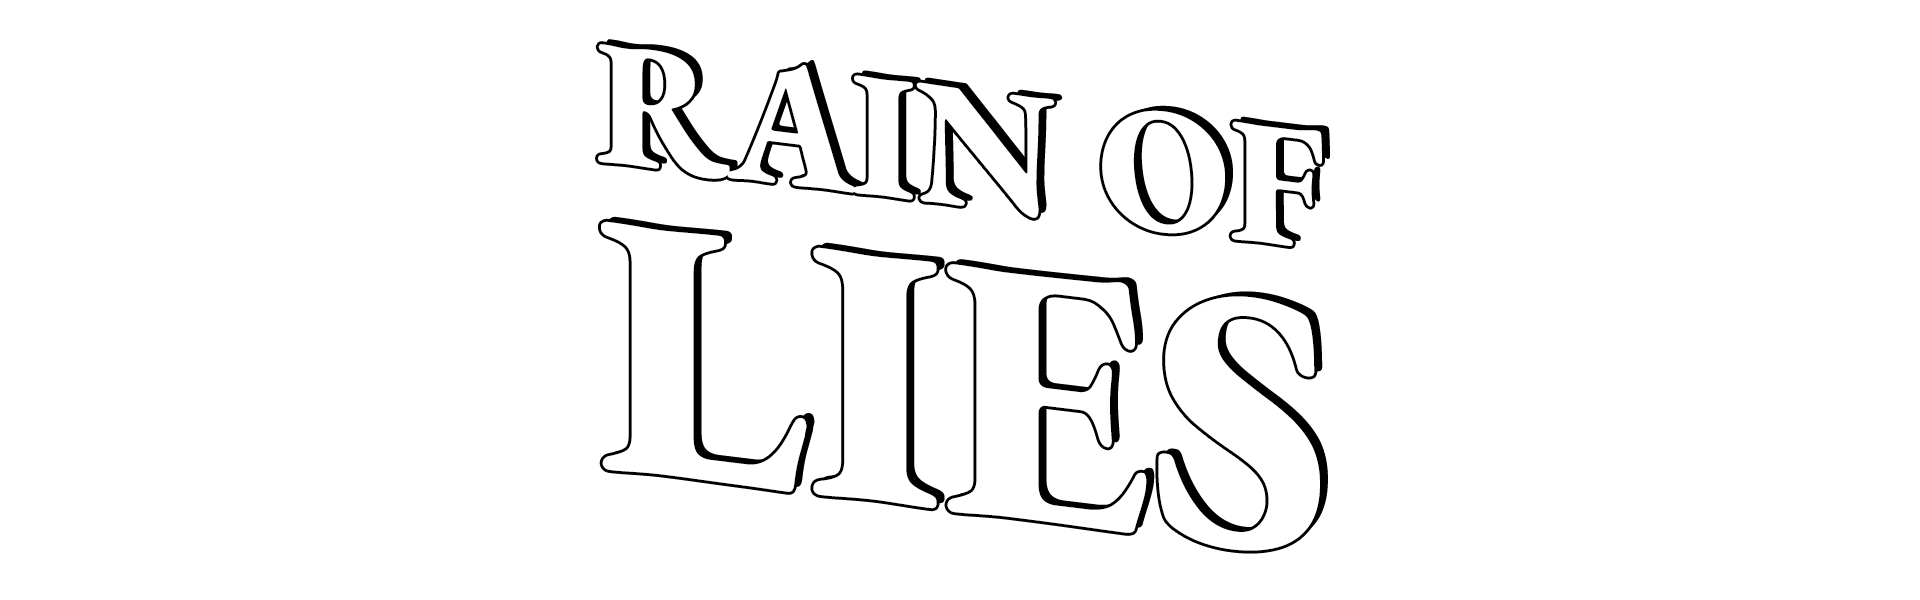 RAIN OF LIES